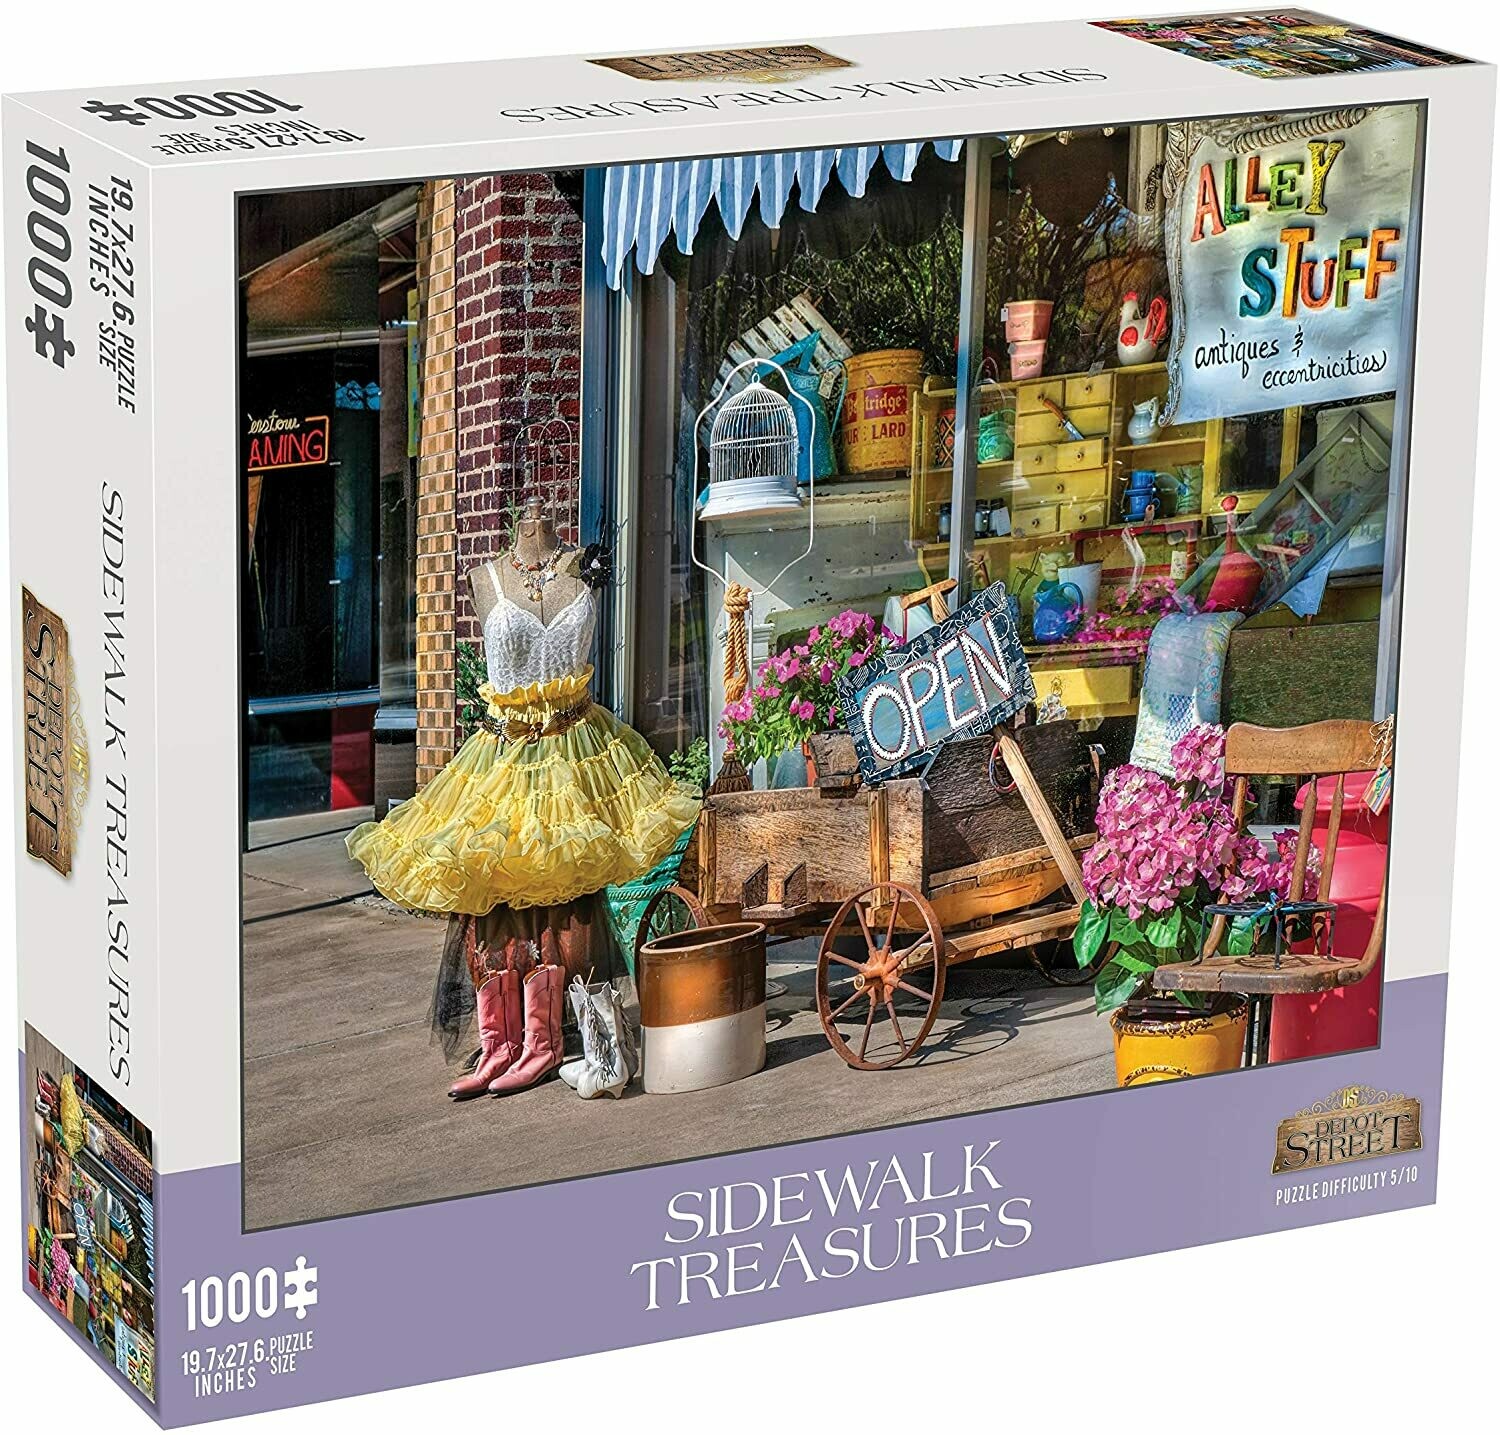 Sidewalk Treasures 1000 Piece Jigsaw Puzzle